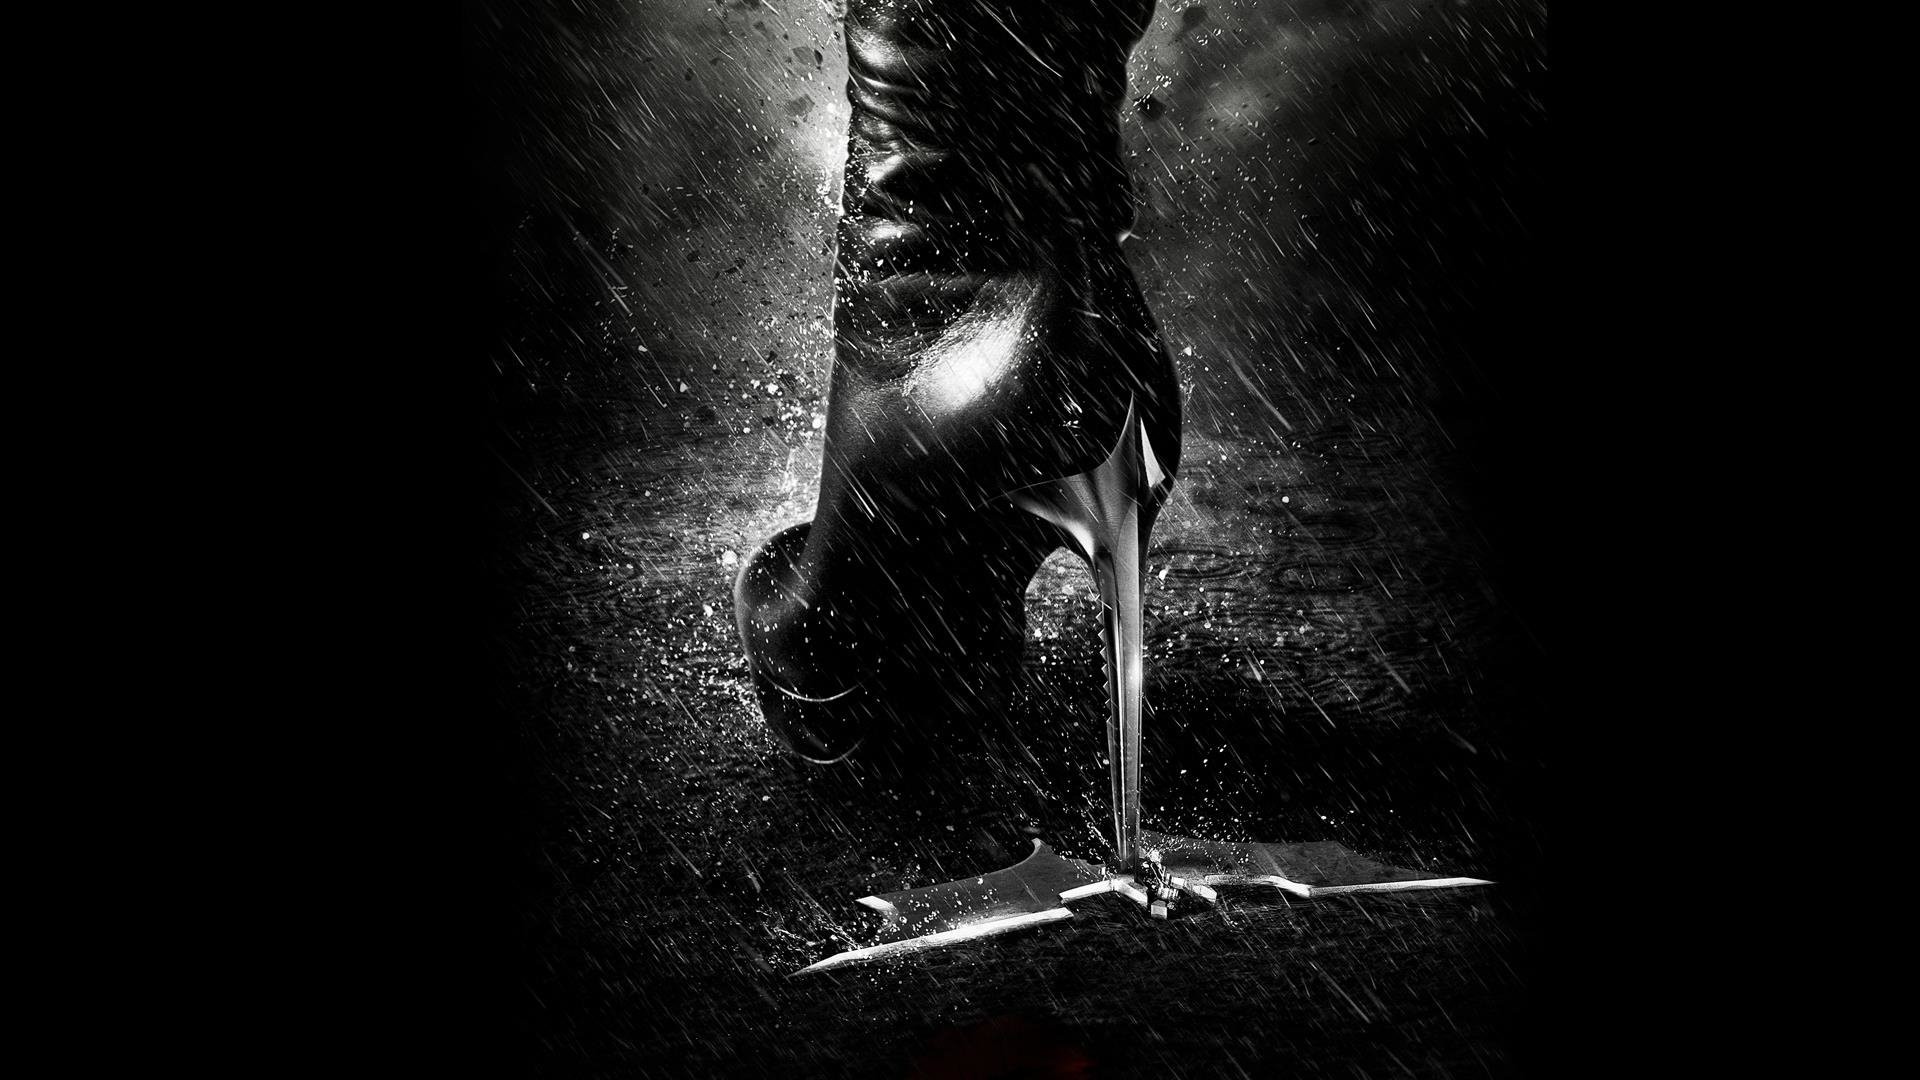 The Dark Knight Rises Wallpaper HD 1920x1080 (79+ images)